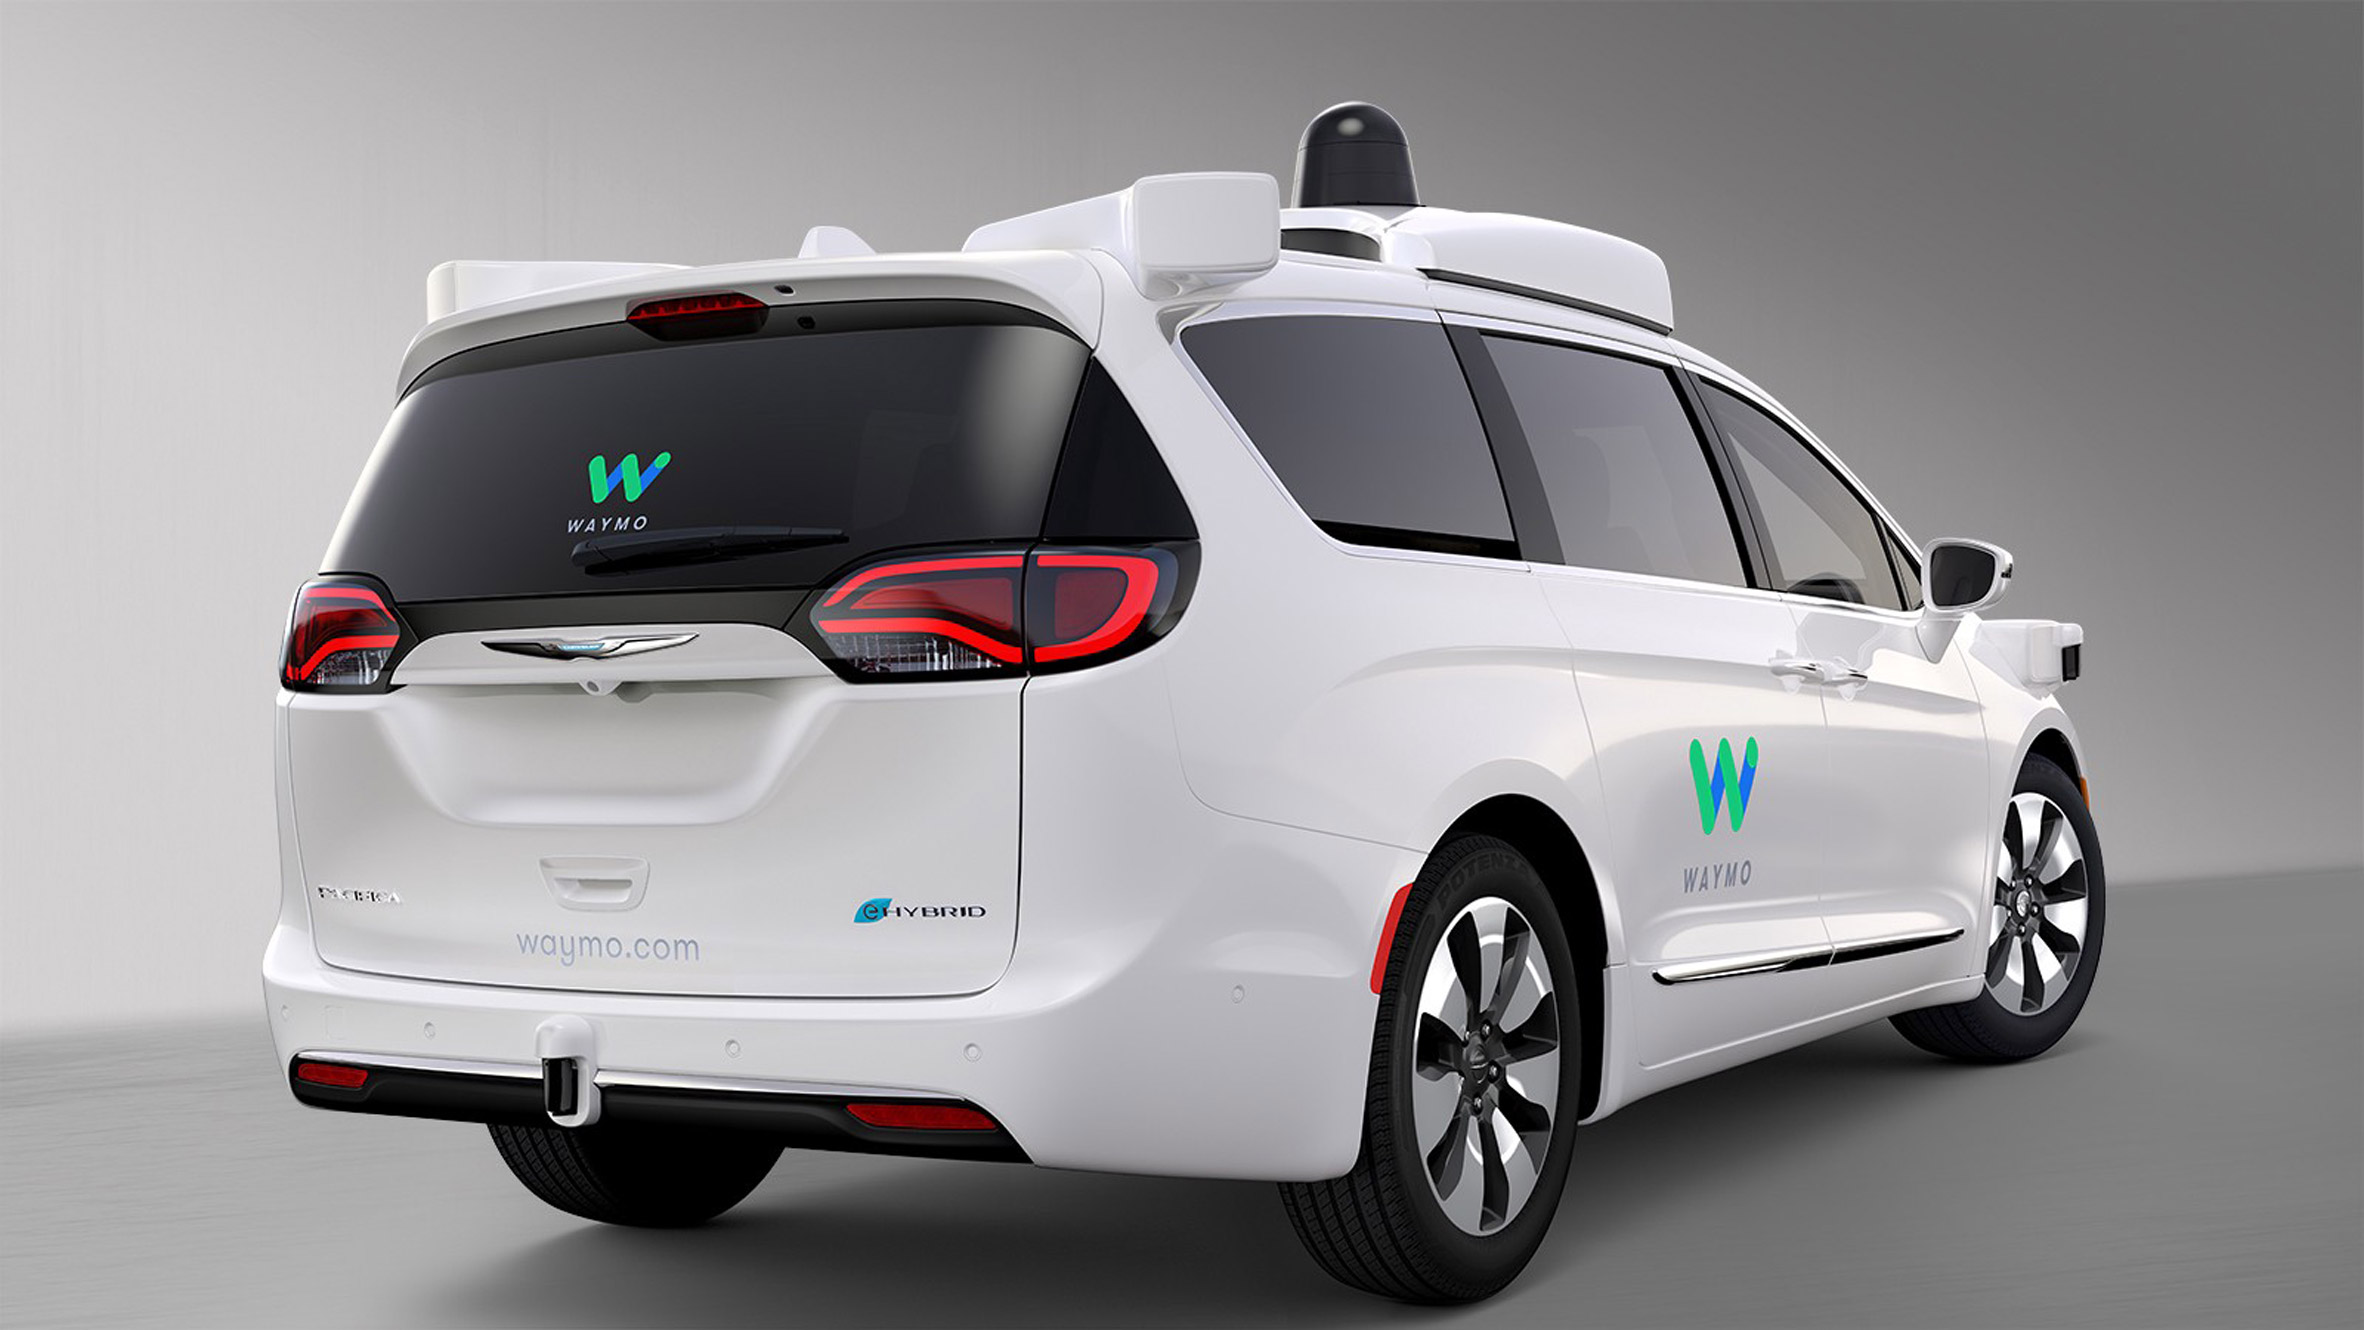 Waymo Chrysler self-driving car